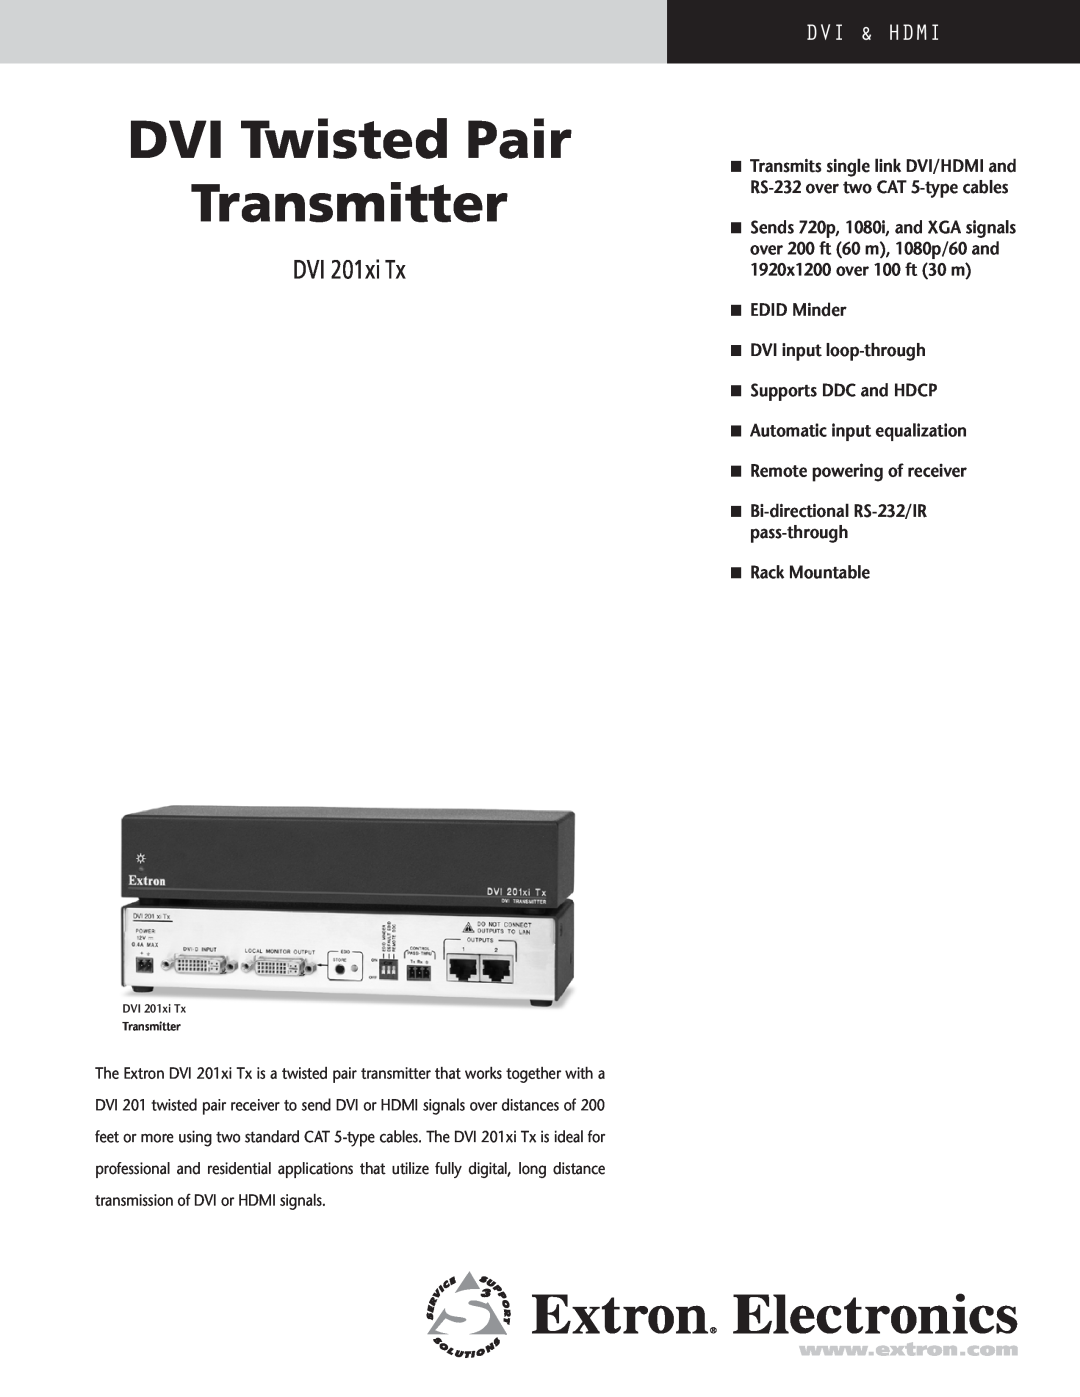 Extron electronic DVI 201xi Tx manual DVi 201xi Tx, DVI Twisted Pair Transmitter, Dvi & Hdmi, n Rack Mountable 